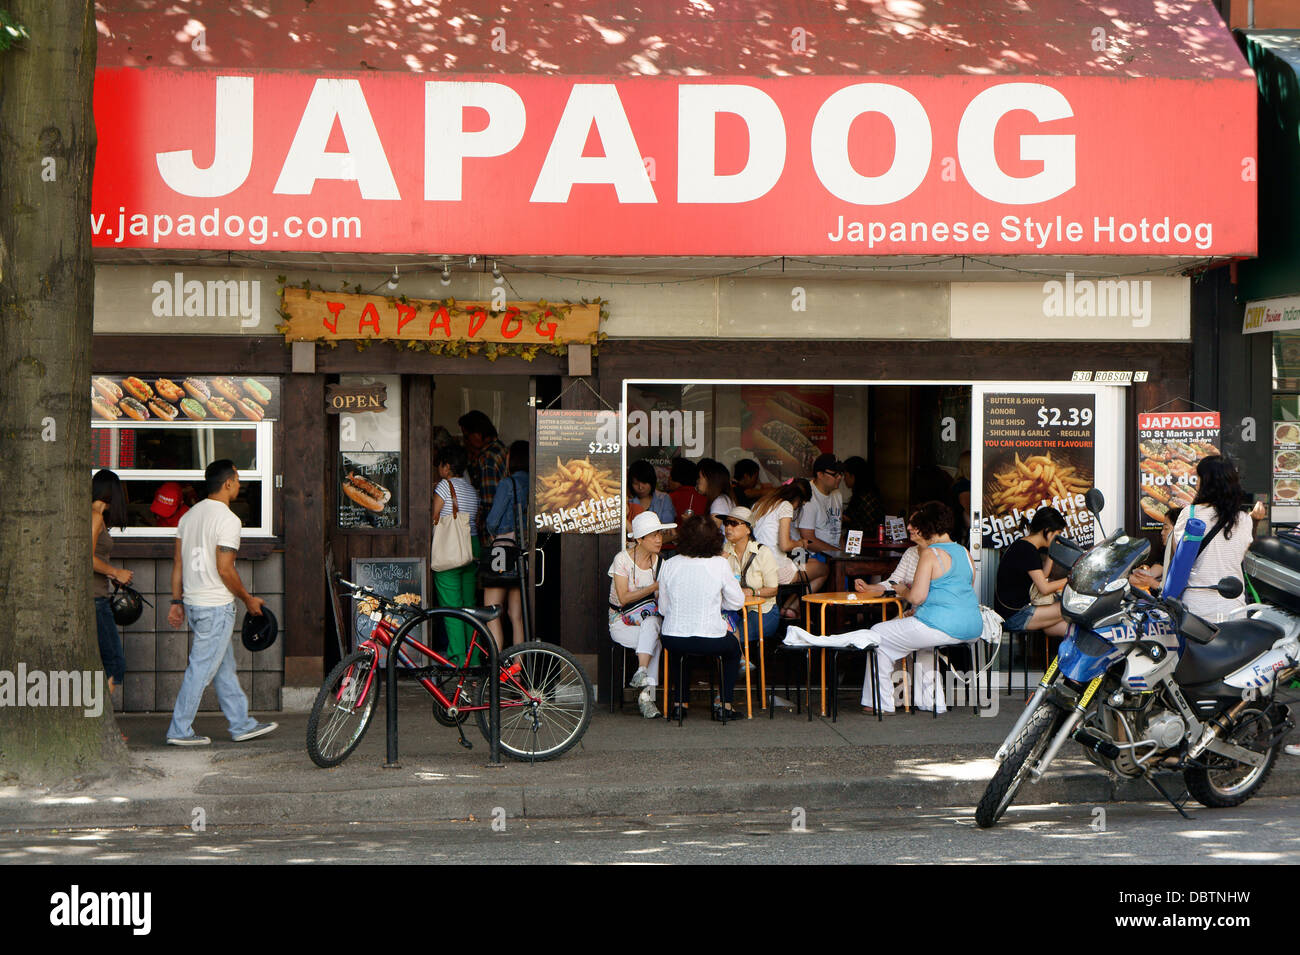 Japadog Japanese style hot dog Restaurant on Robson Street, Vancouver, BC, Canada Stock Photo